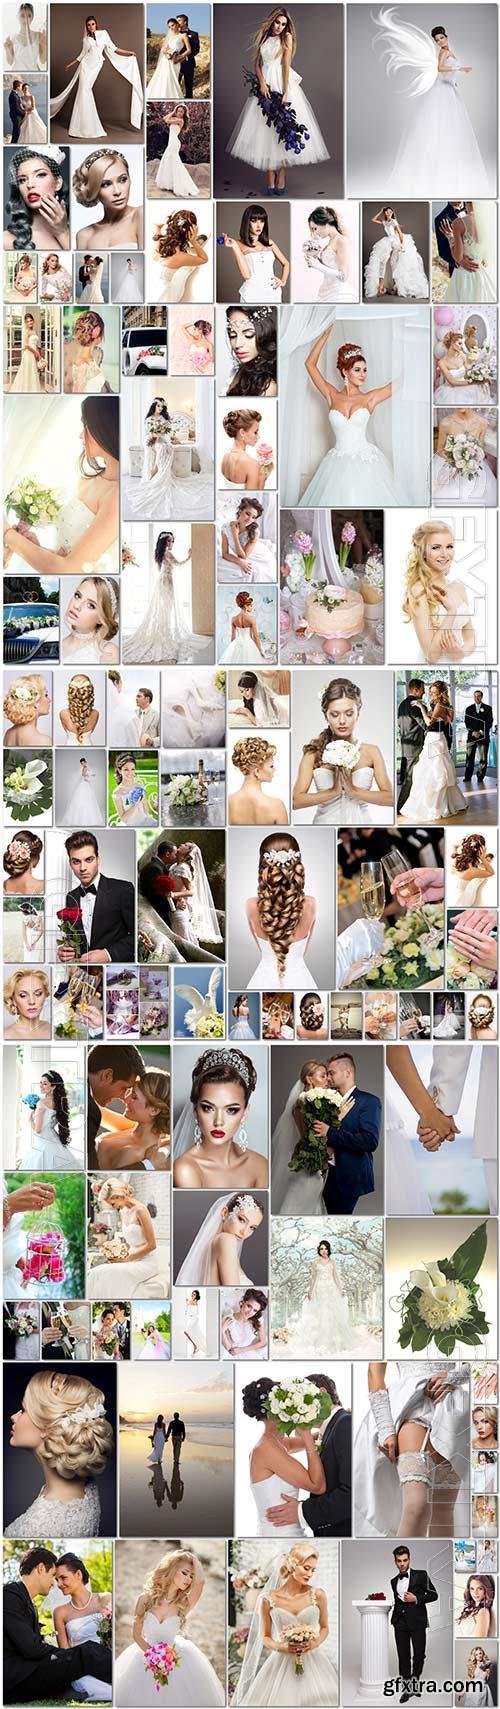 100 Bundle beautiful bride and groom, wedding stock photo vol 7